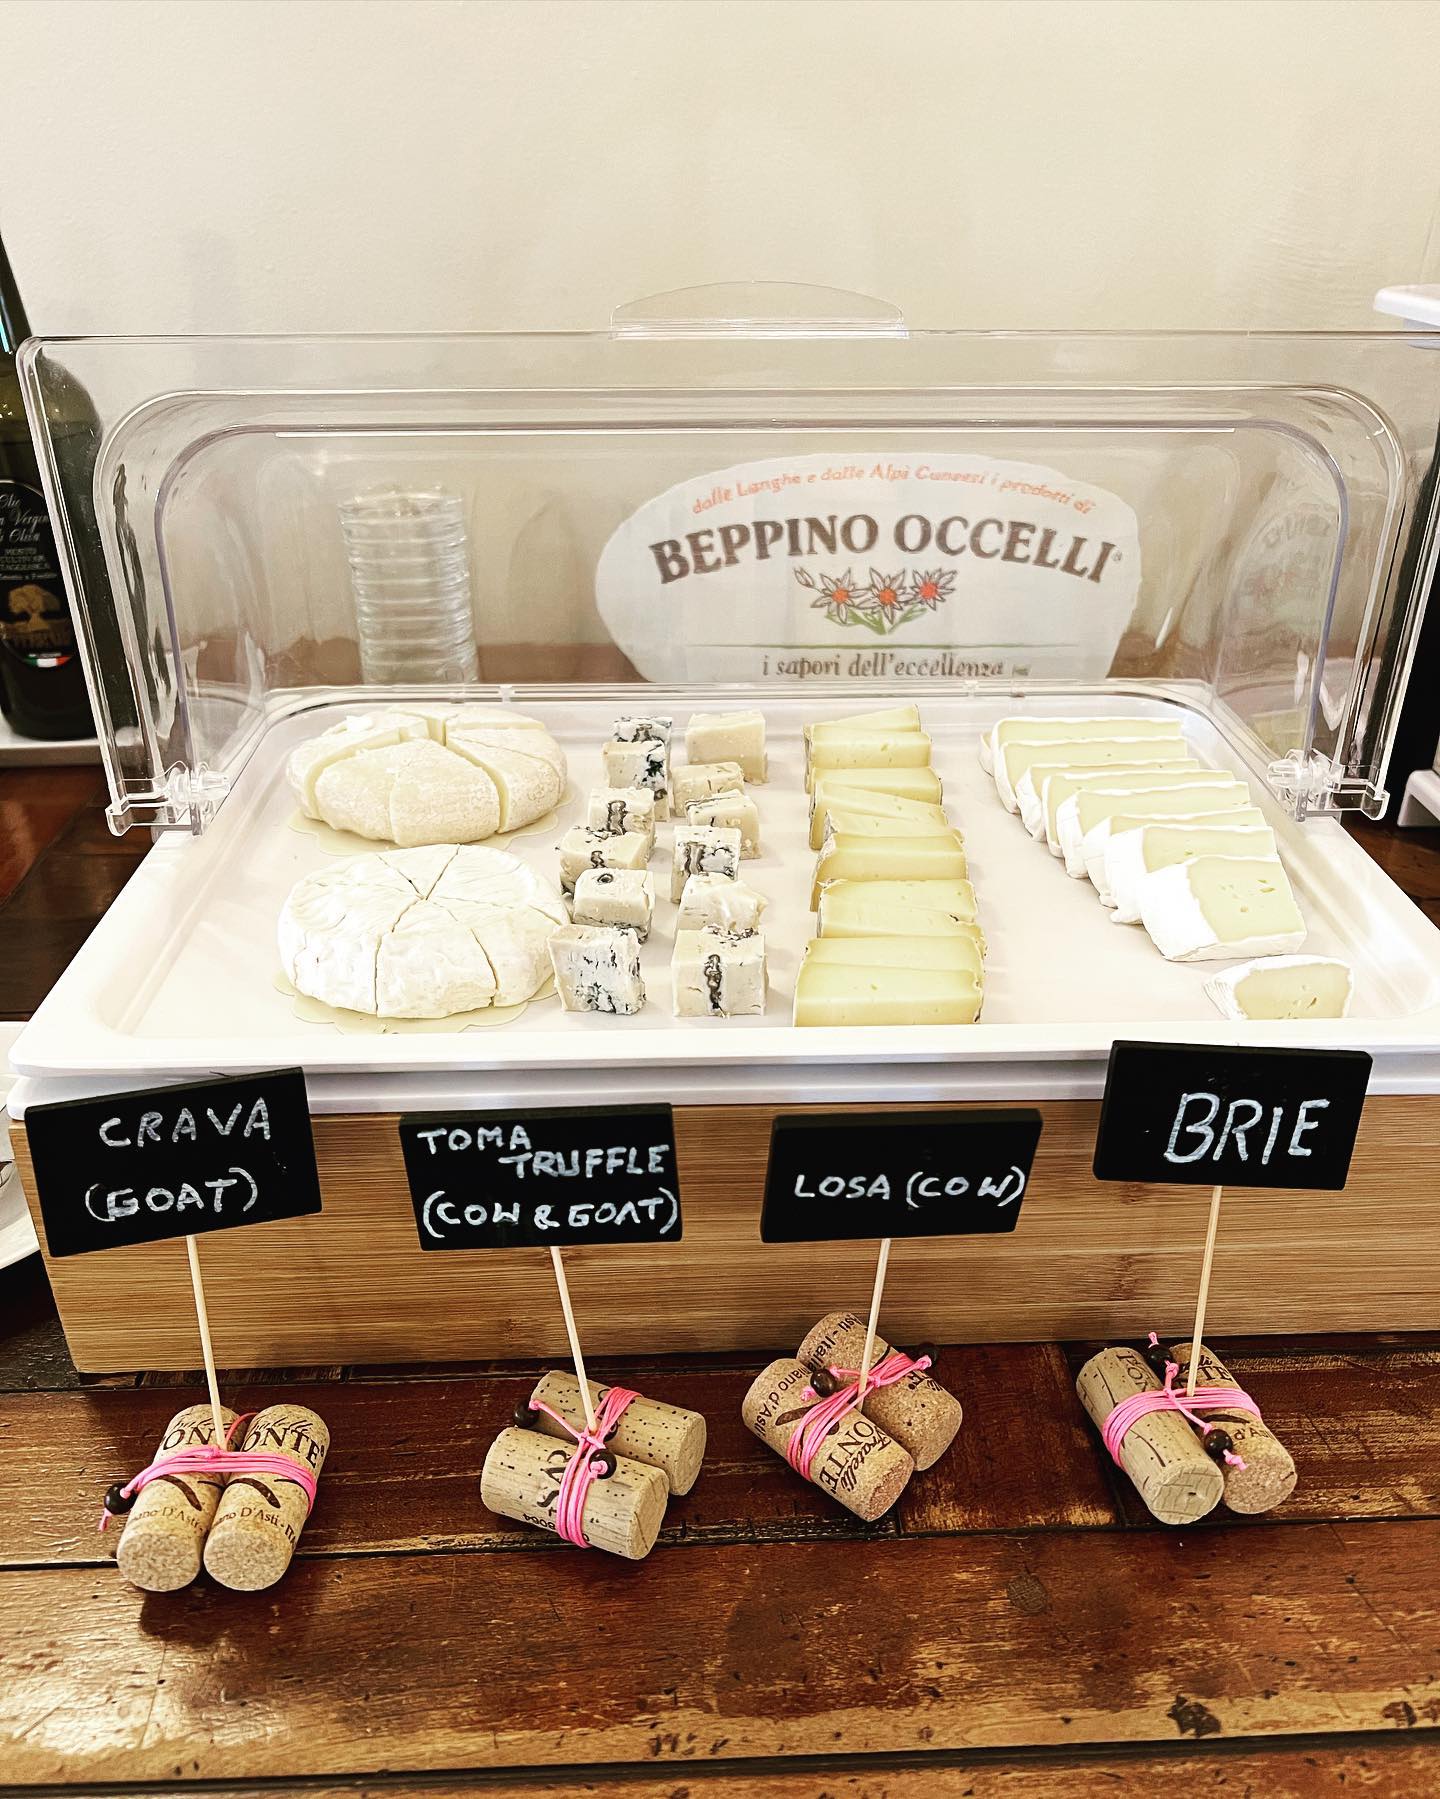 SPENDING THE WEEK IN ITALY ON A CHEESE JOURNEY 🧀🧀
.
.
Skæreosten på morgenmadsbuffeten er i denne uge skiftet ud med trøffeloste, gedeoste og andre italienske specialiteter. 

Følg med i vores stories her på profilen og hos @cheesejourneys og smag med, når vi besøger osteproducenter mv. 
.
.
.

#ostesnak #cheesetalks #cheese #cheeseislife #cheeselovers #instacheese #cheeseplease #ost #cheeseblogger #foodie #fromage #cheeseblog #foodstylist #cheesephoto #cheesephotography #cheesetravel #travel #travelbloggervibes #italygram #italy #cheesejourneys